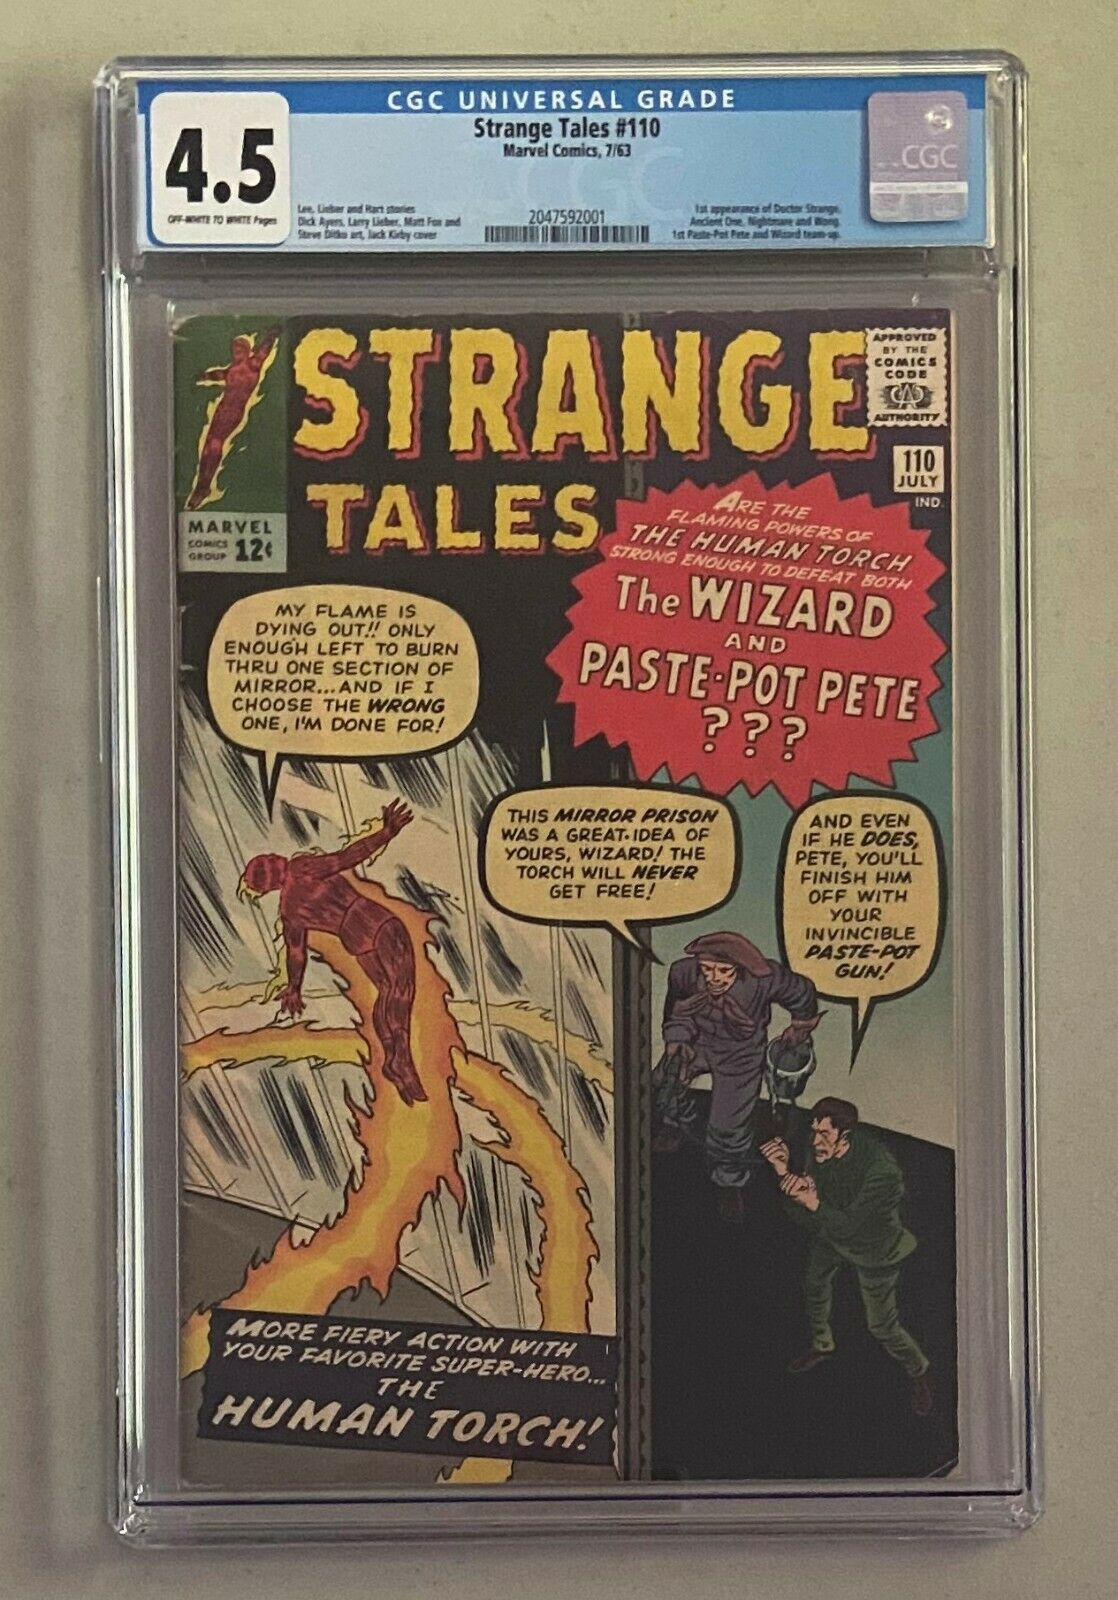 STRANGE TALES 110 Marvel Comics 1963 CGC 45 Doctor Strange 1st Appearance 